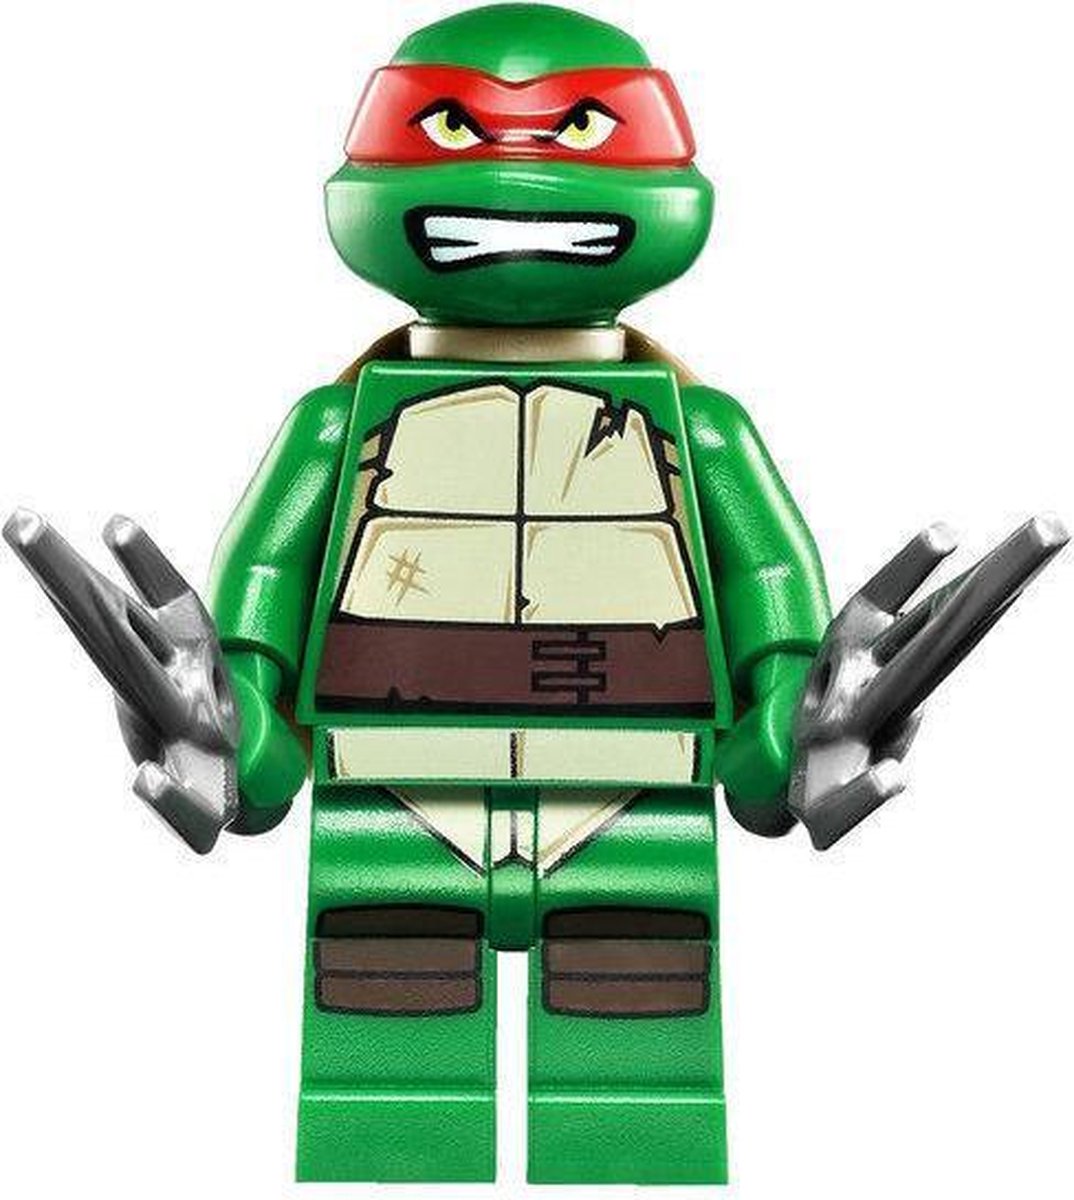 LEGO Ninja Turtles L'attaque du quartier général de la tortue - 79103